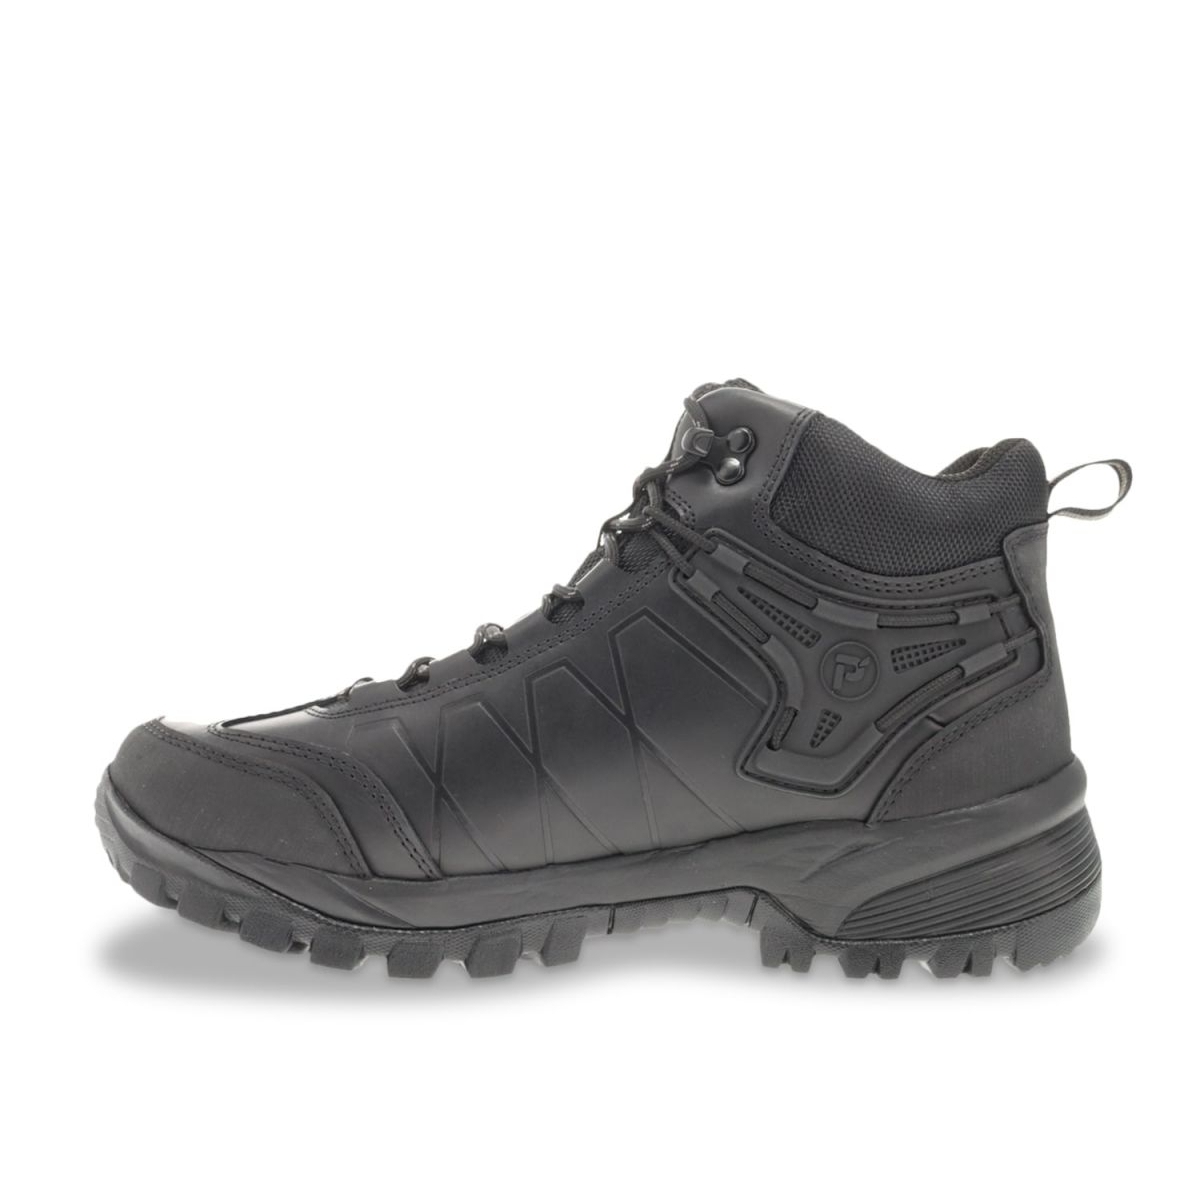 Propet Men's Ridge Walker Force Hiking Boots Black - MBA052LBLK BLACK - BLACK, 8.5 XX-Wide